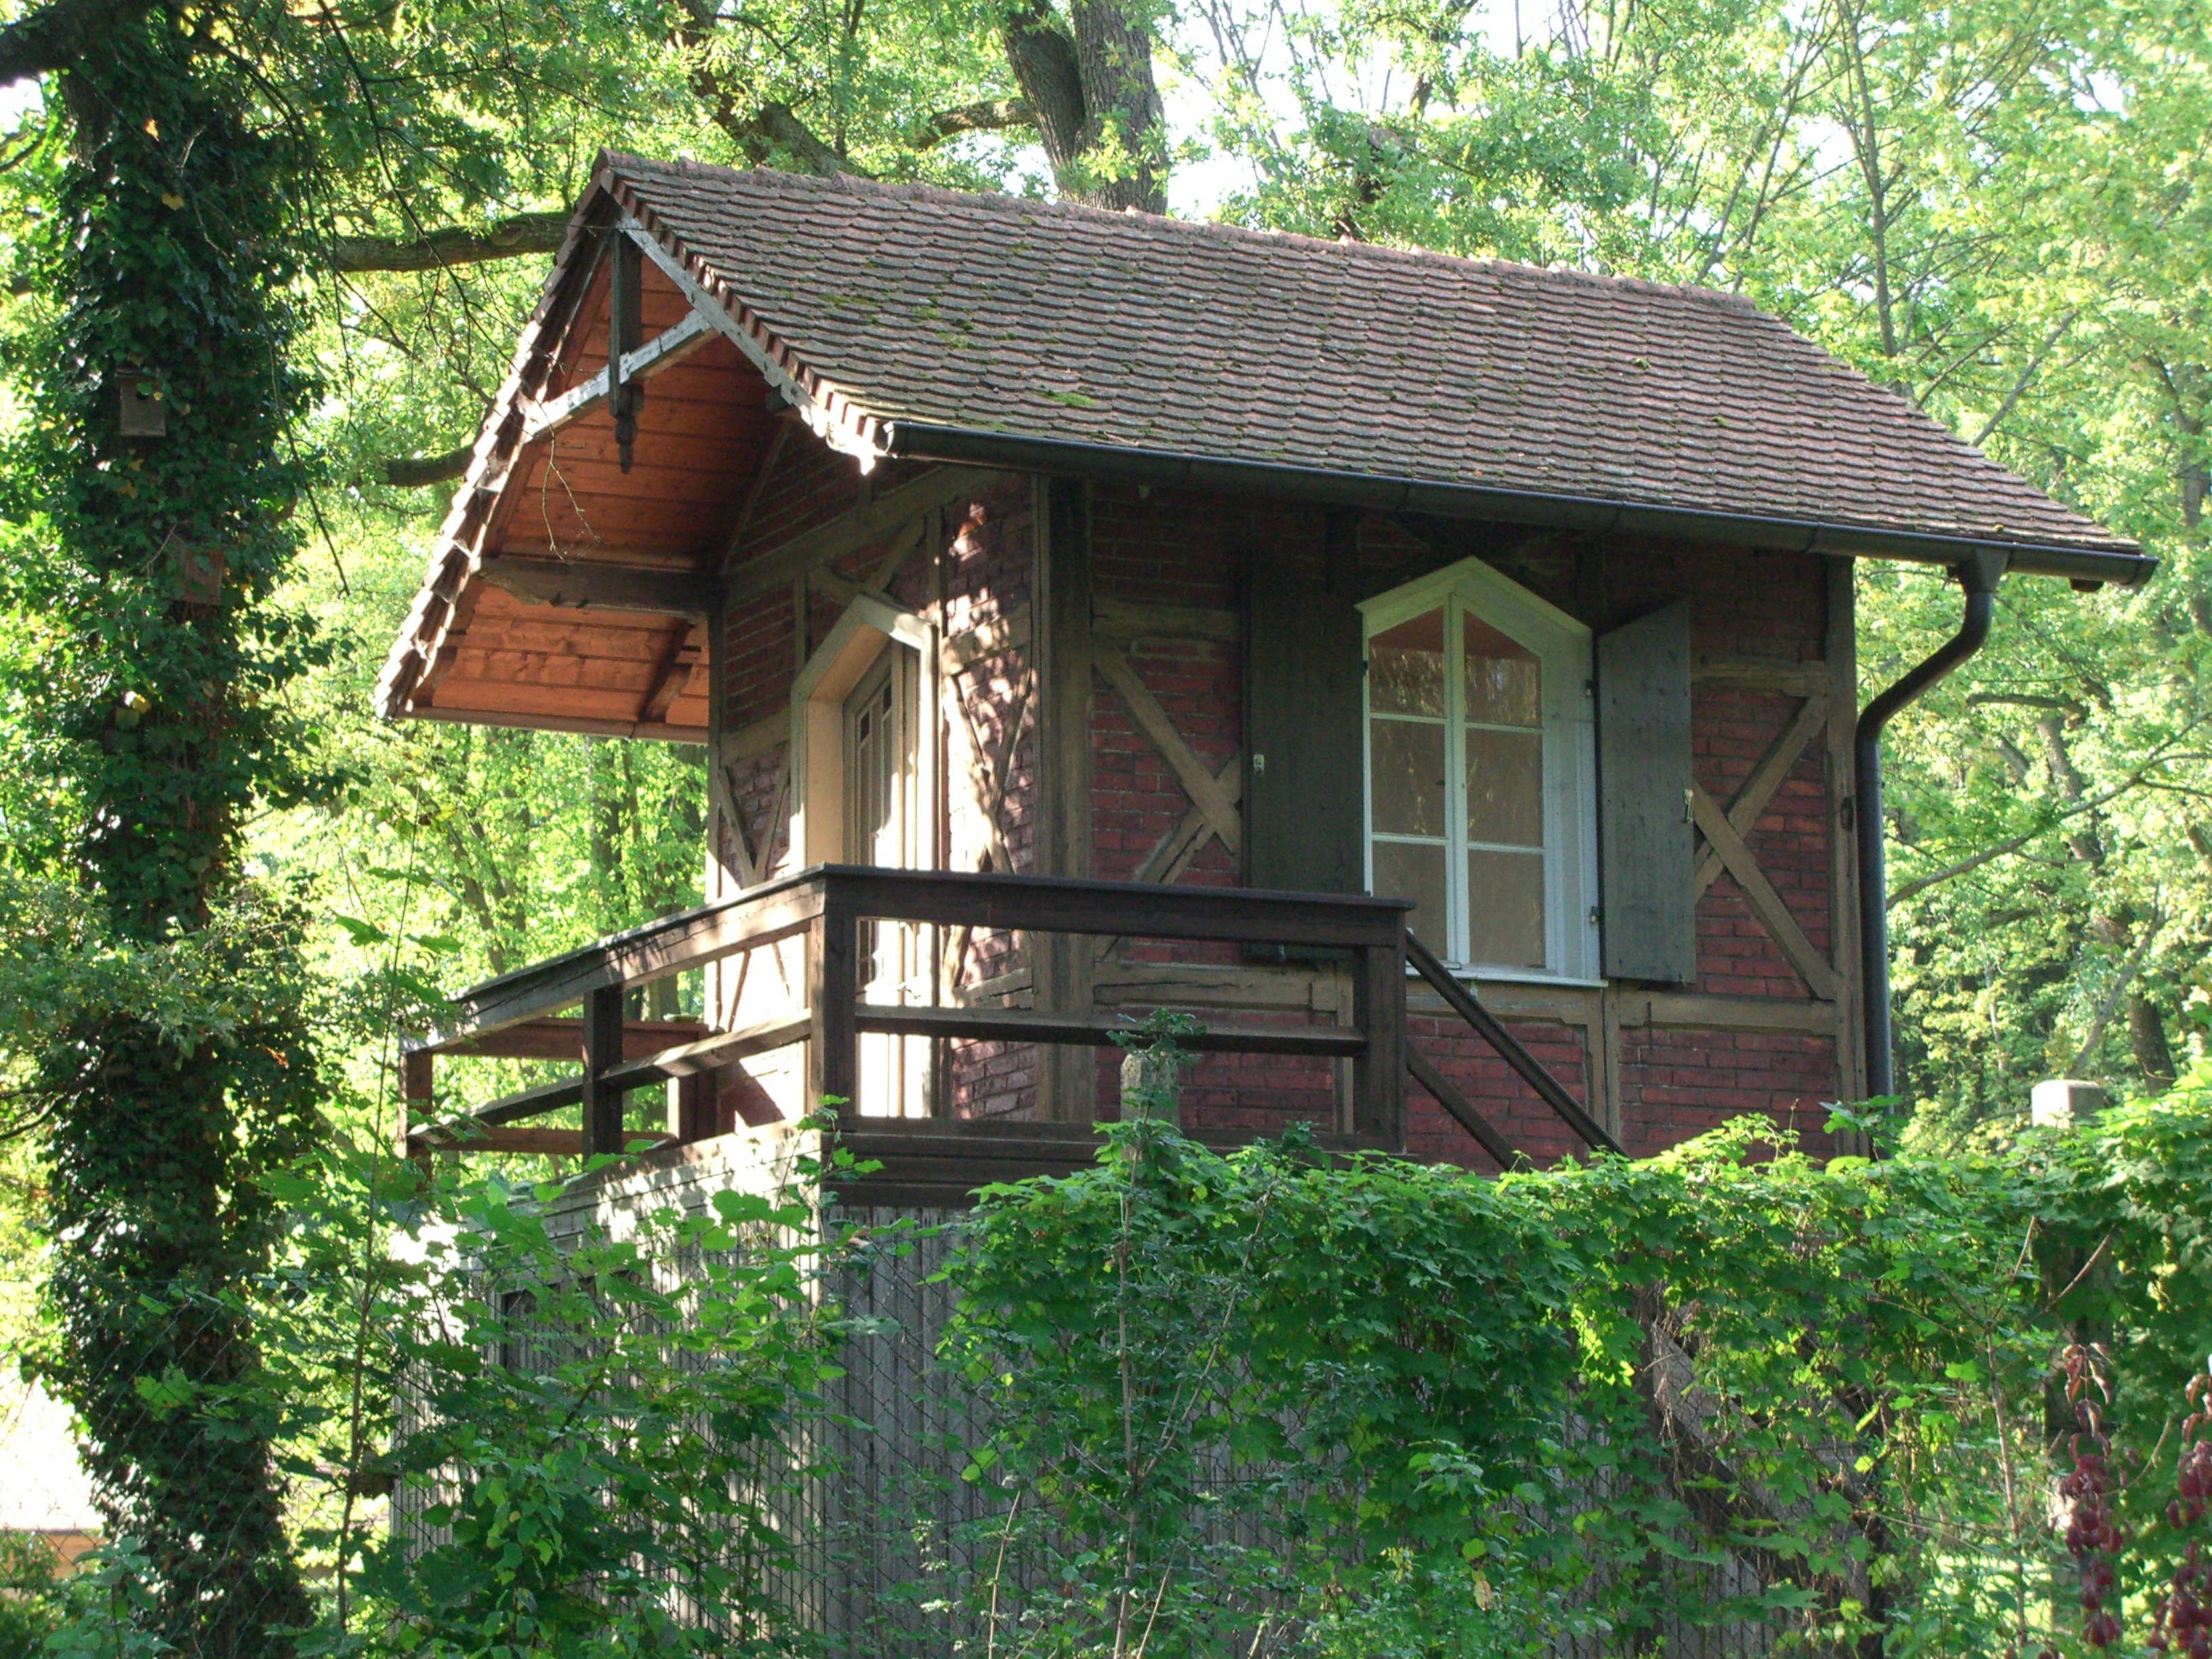 Summer house - Wikipedia, the free encyclopedia